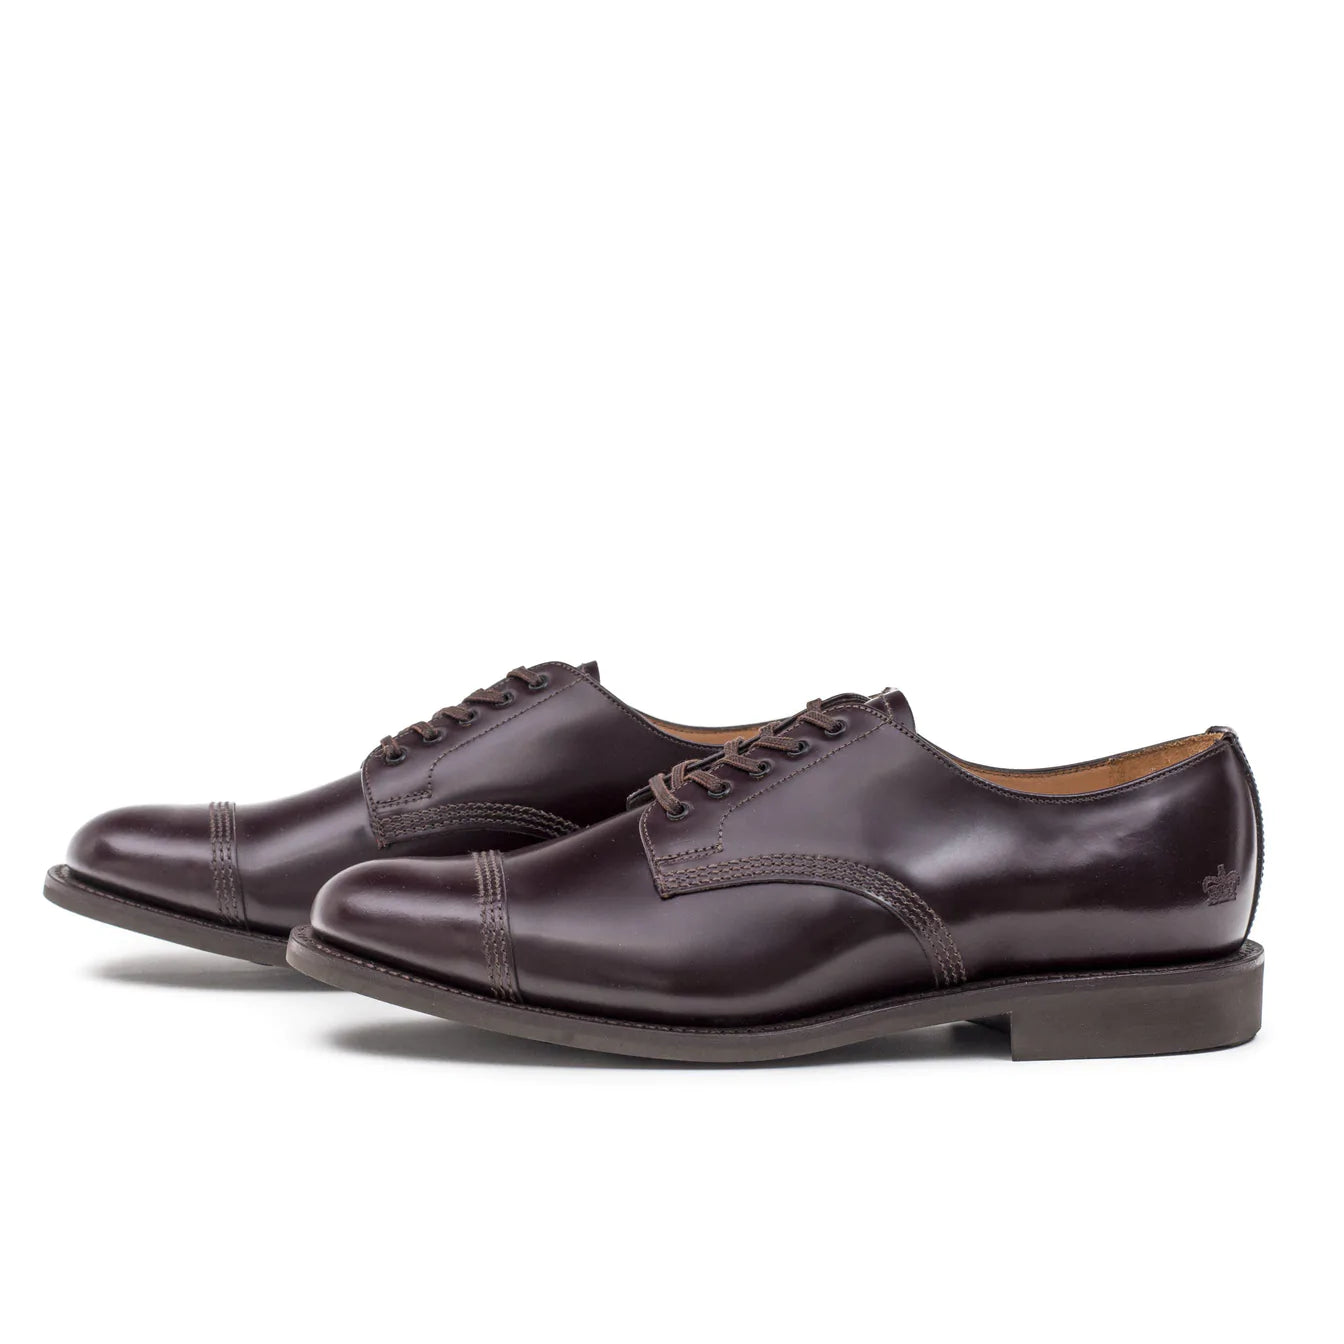 1128R Military Derby Shoe - Burgundy Leather